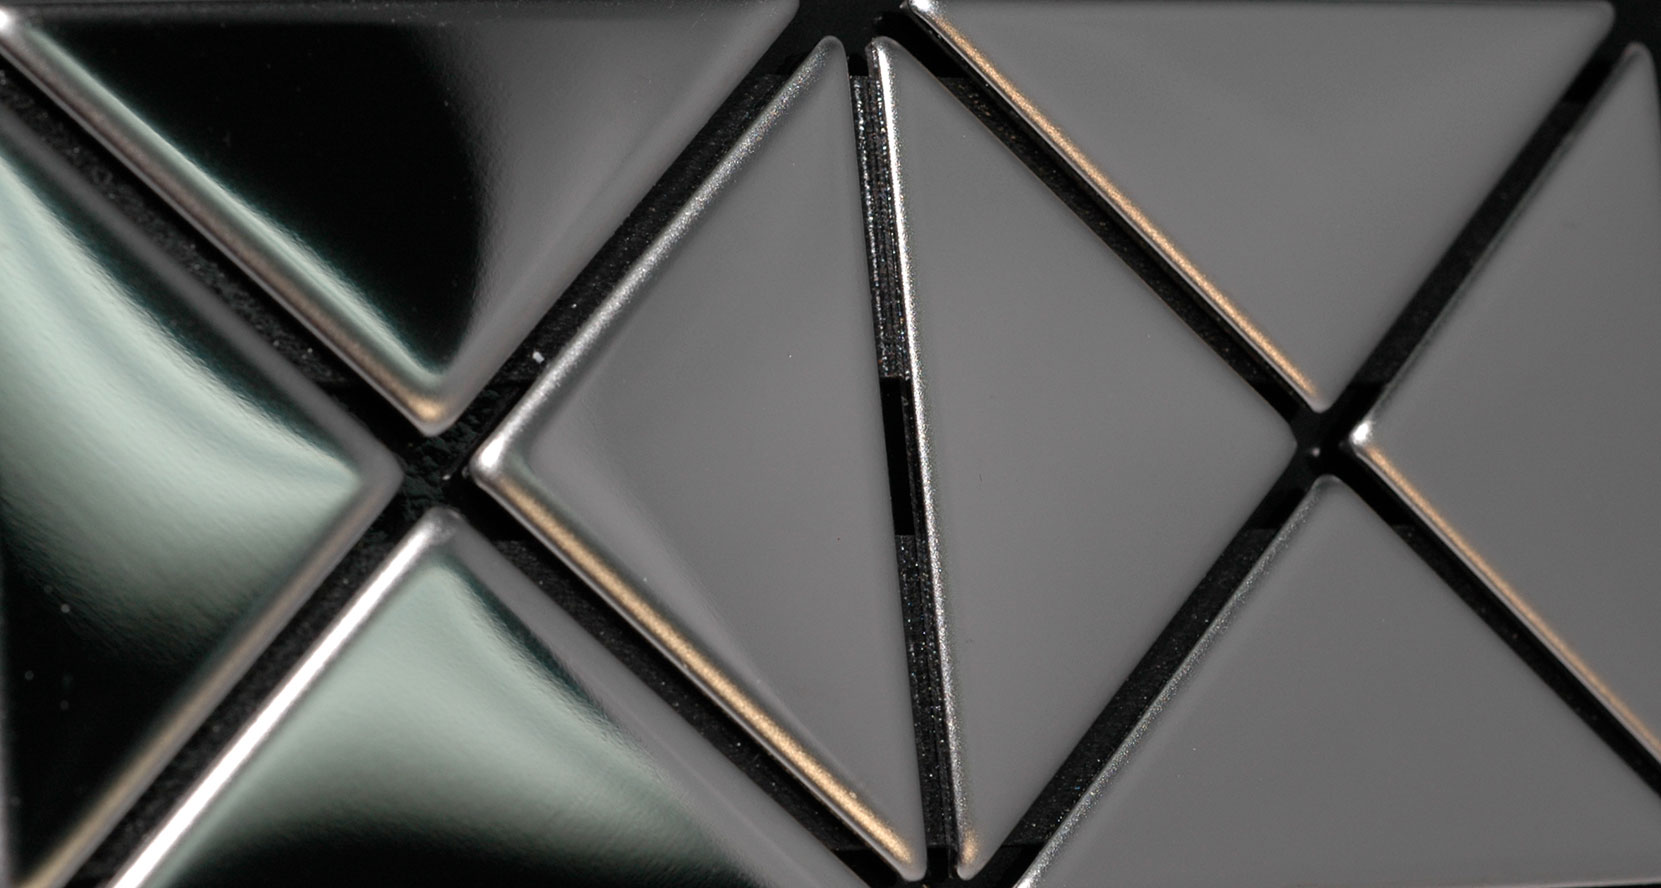 DECO Stainless Steel Mirror Tiles